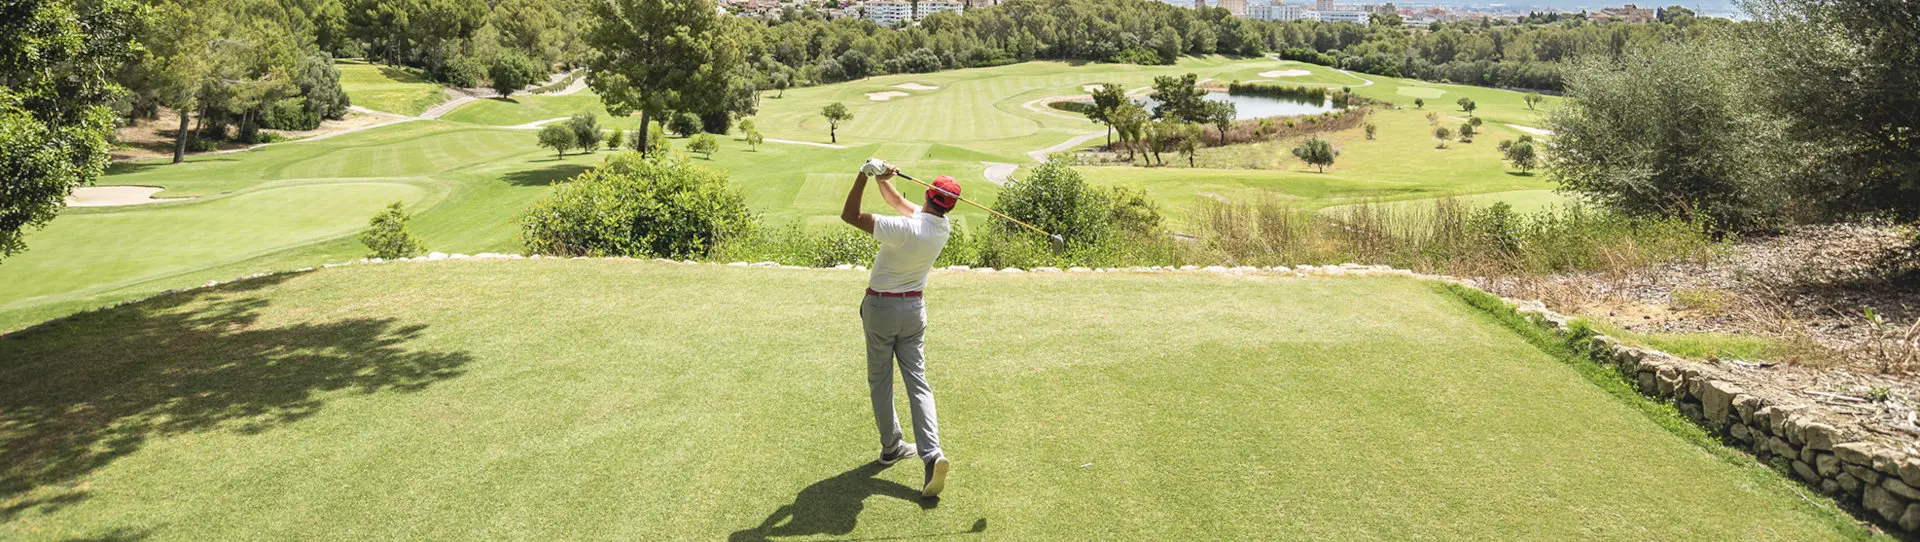 Spain golf courses - Arabella Son Muntaner Golf Course - Photo 3